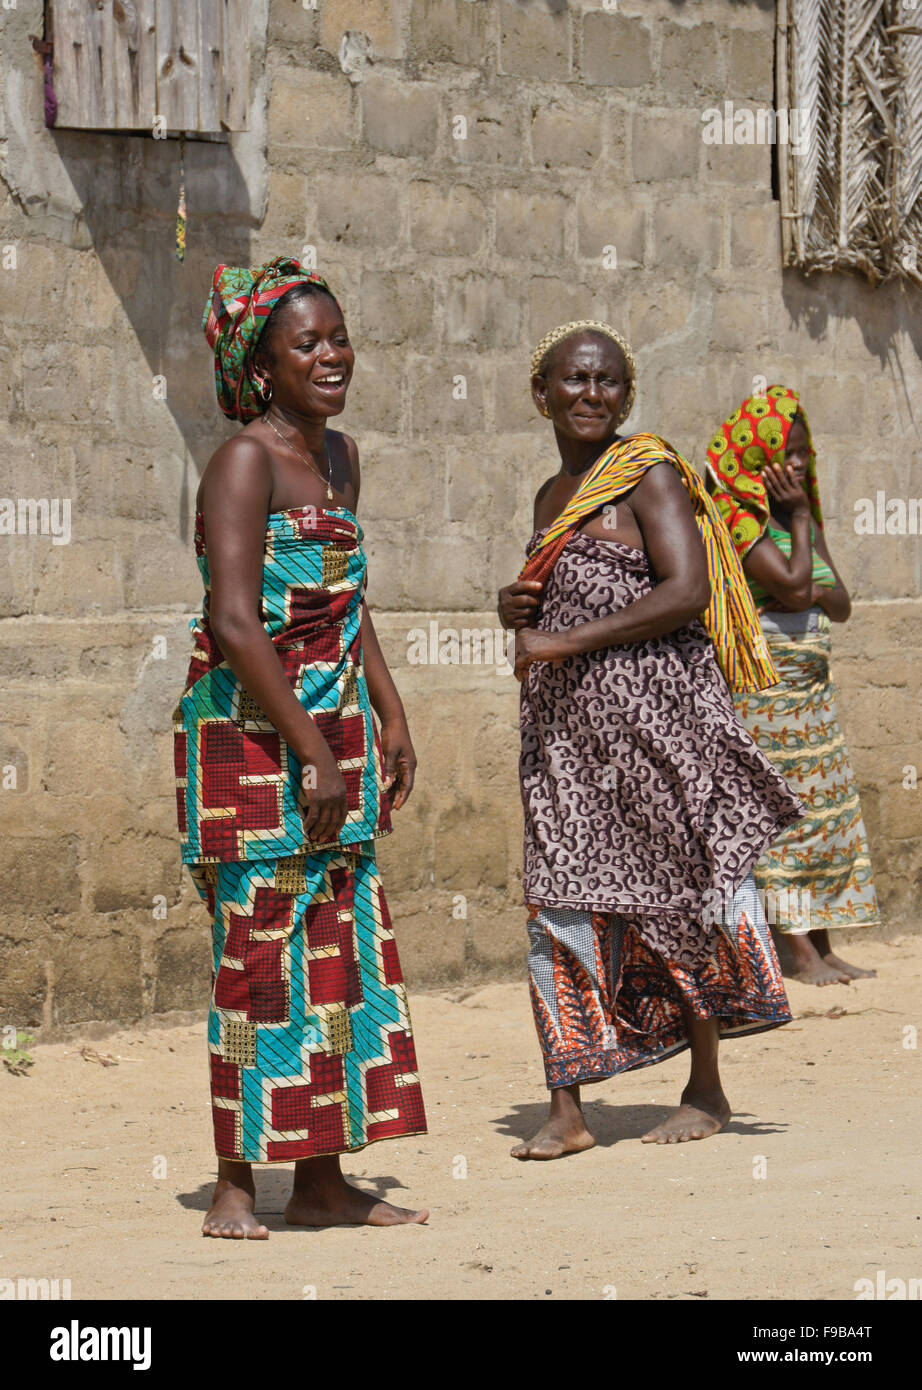 Fon women dancing and singing in village of Heve-Grand Popo, Benin Stock Photo